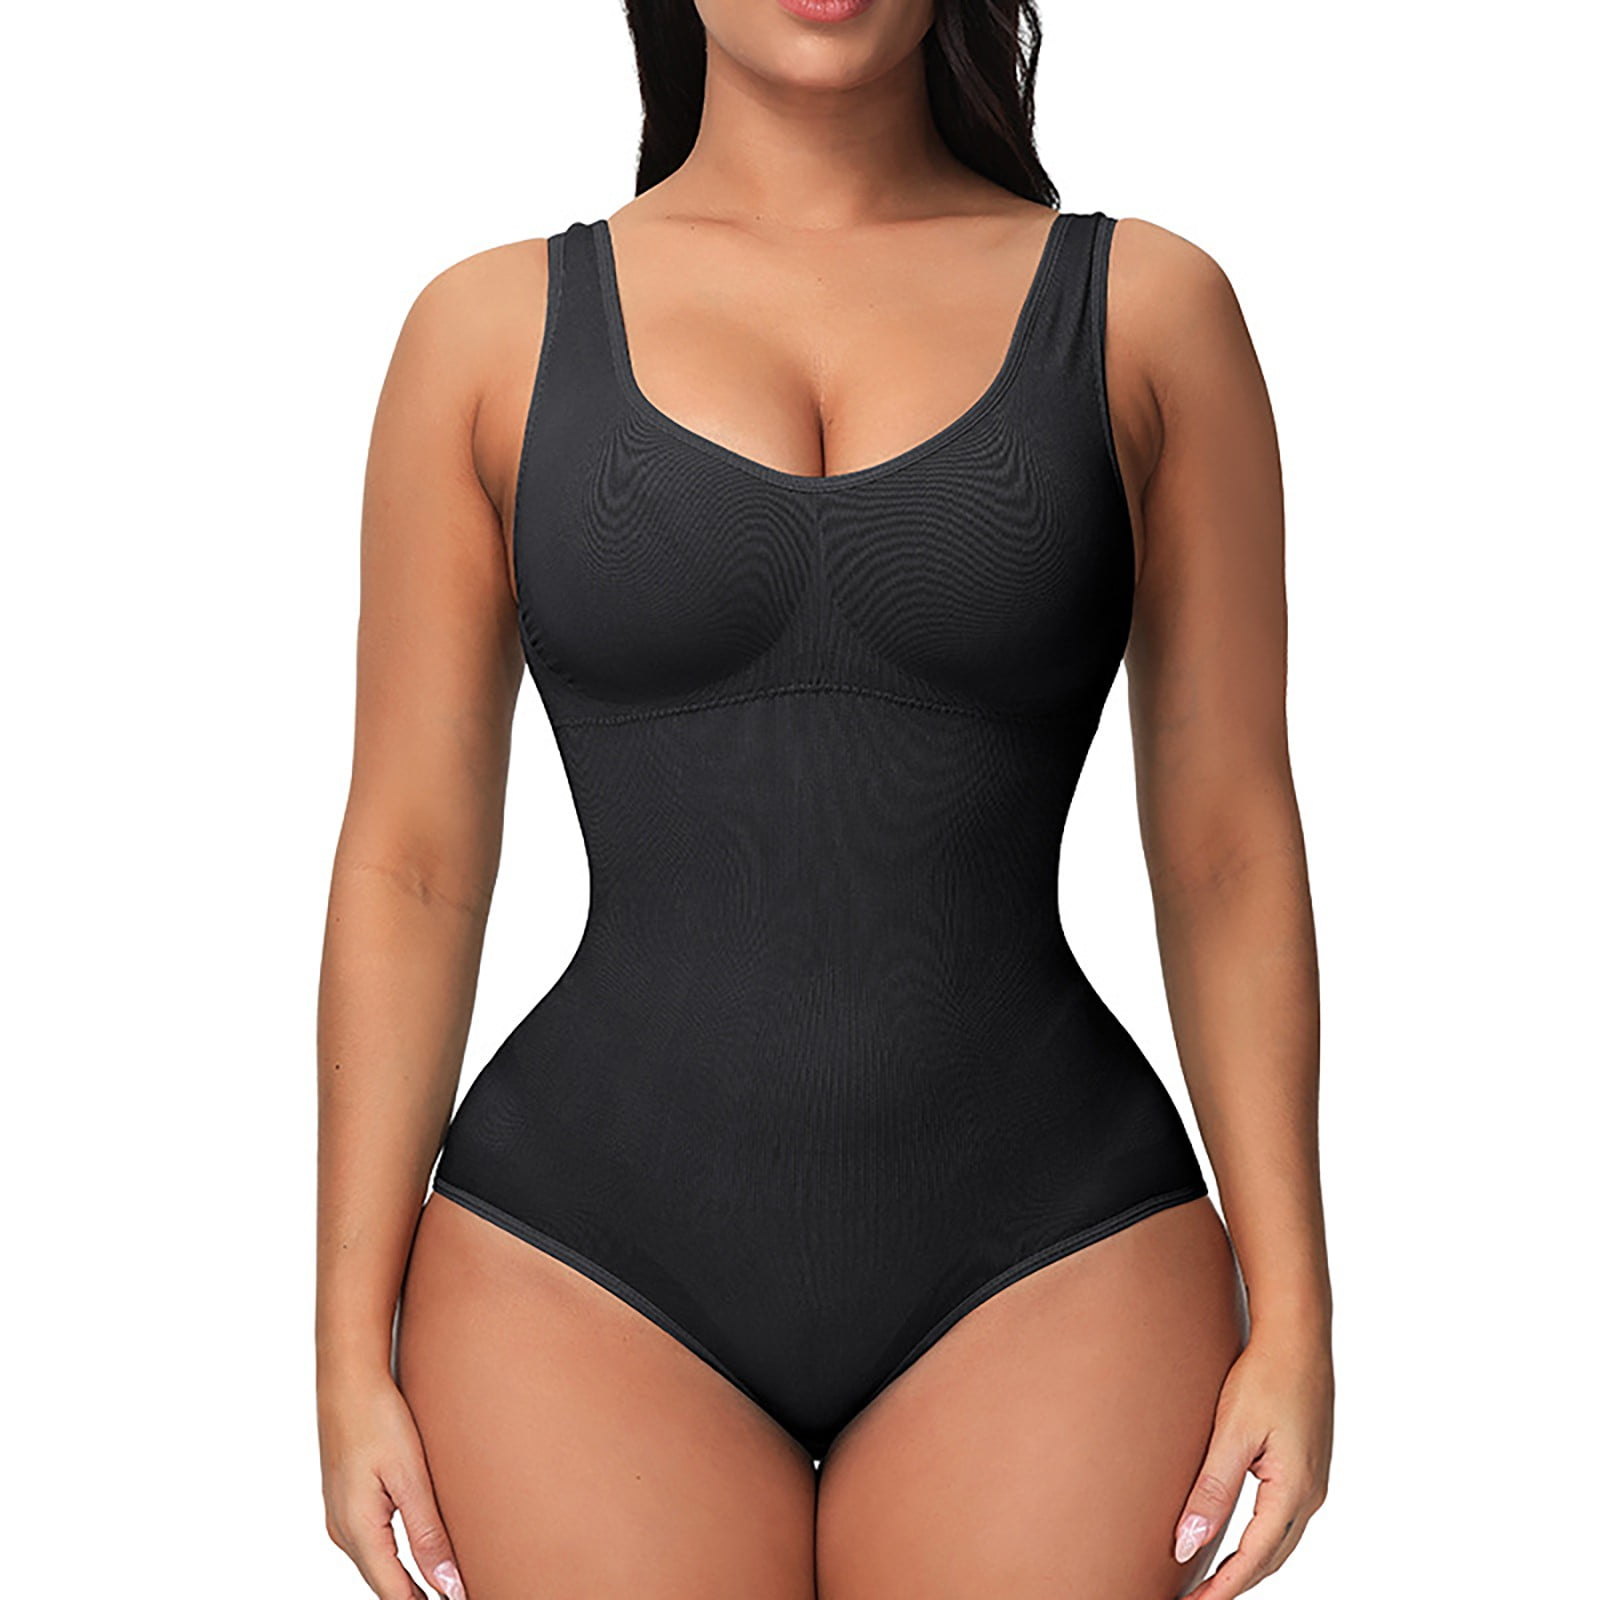 Irisnaya Women's Shapewear Lace Camisole Tank Tops Tummy Control Compression  Bodysuit Built in Bra Body Shaper Slimming V-neck Vest(Black Small) 